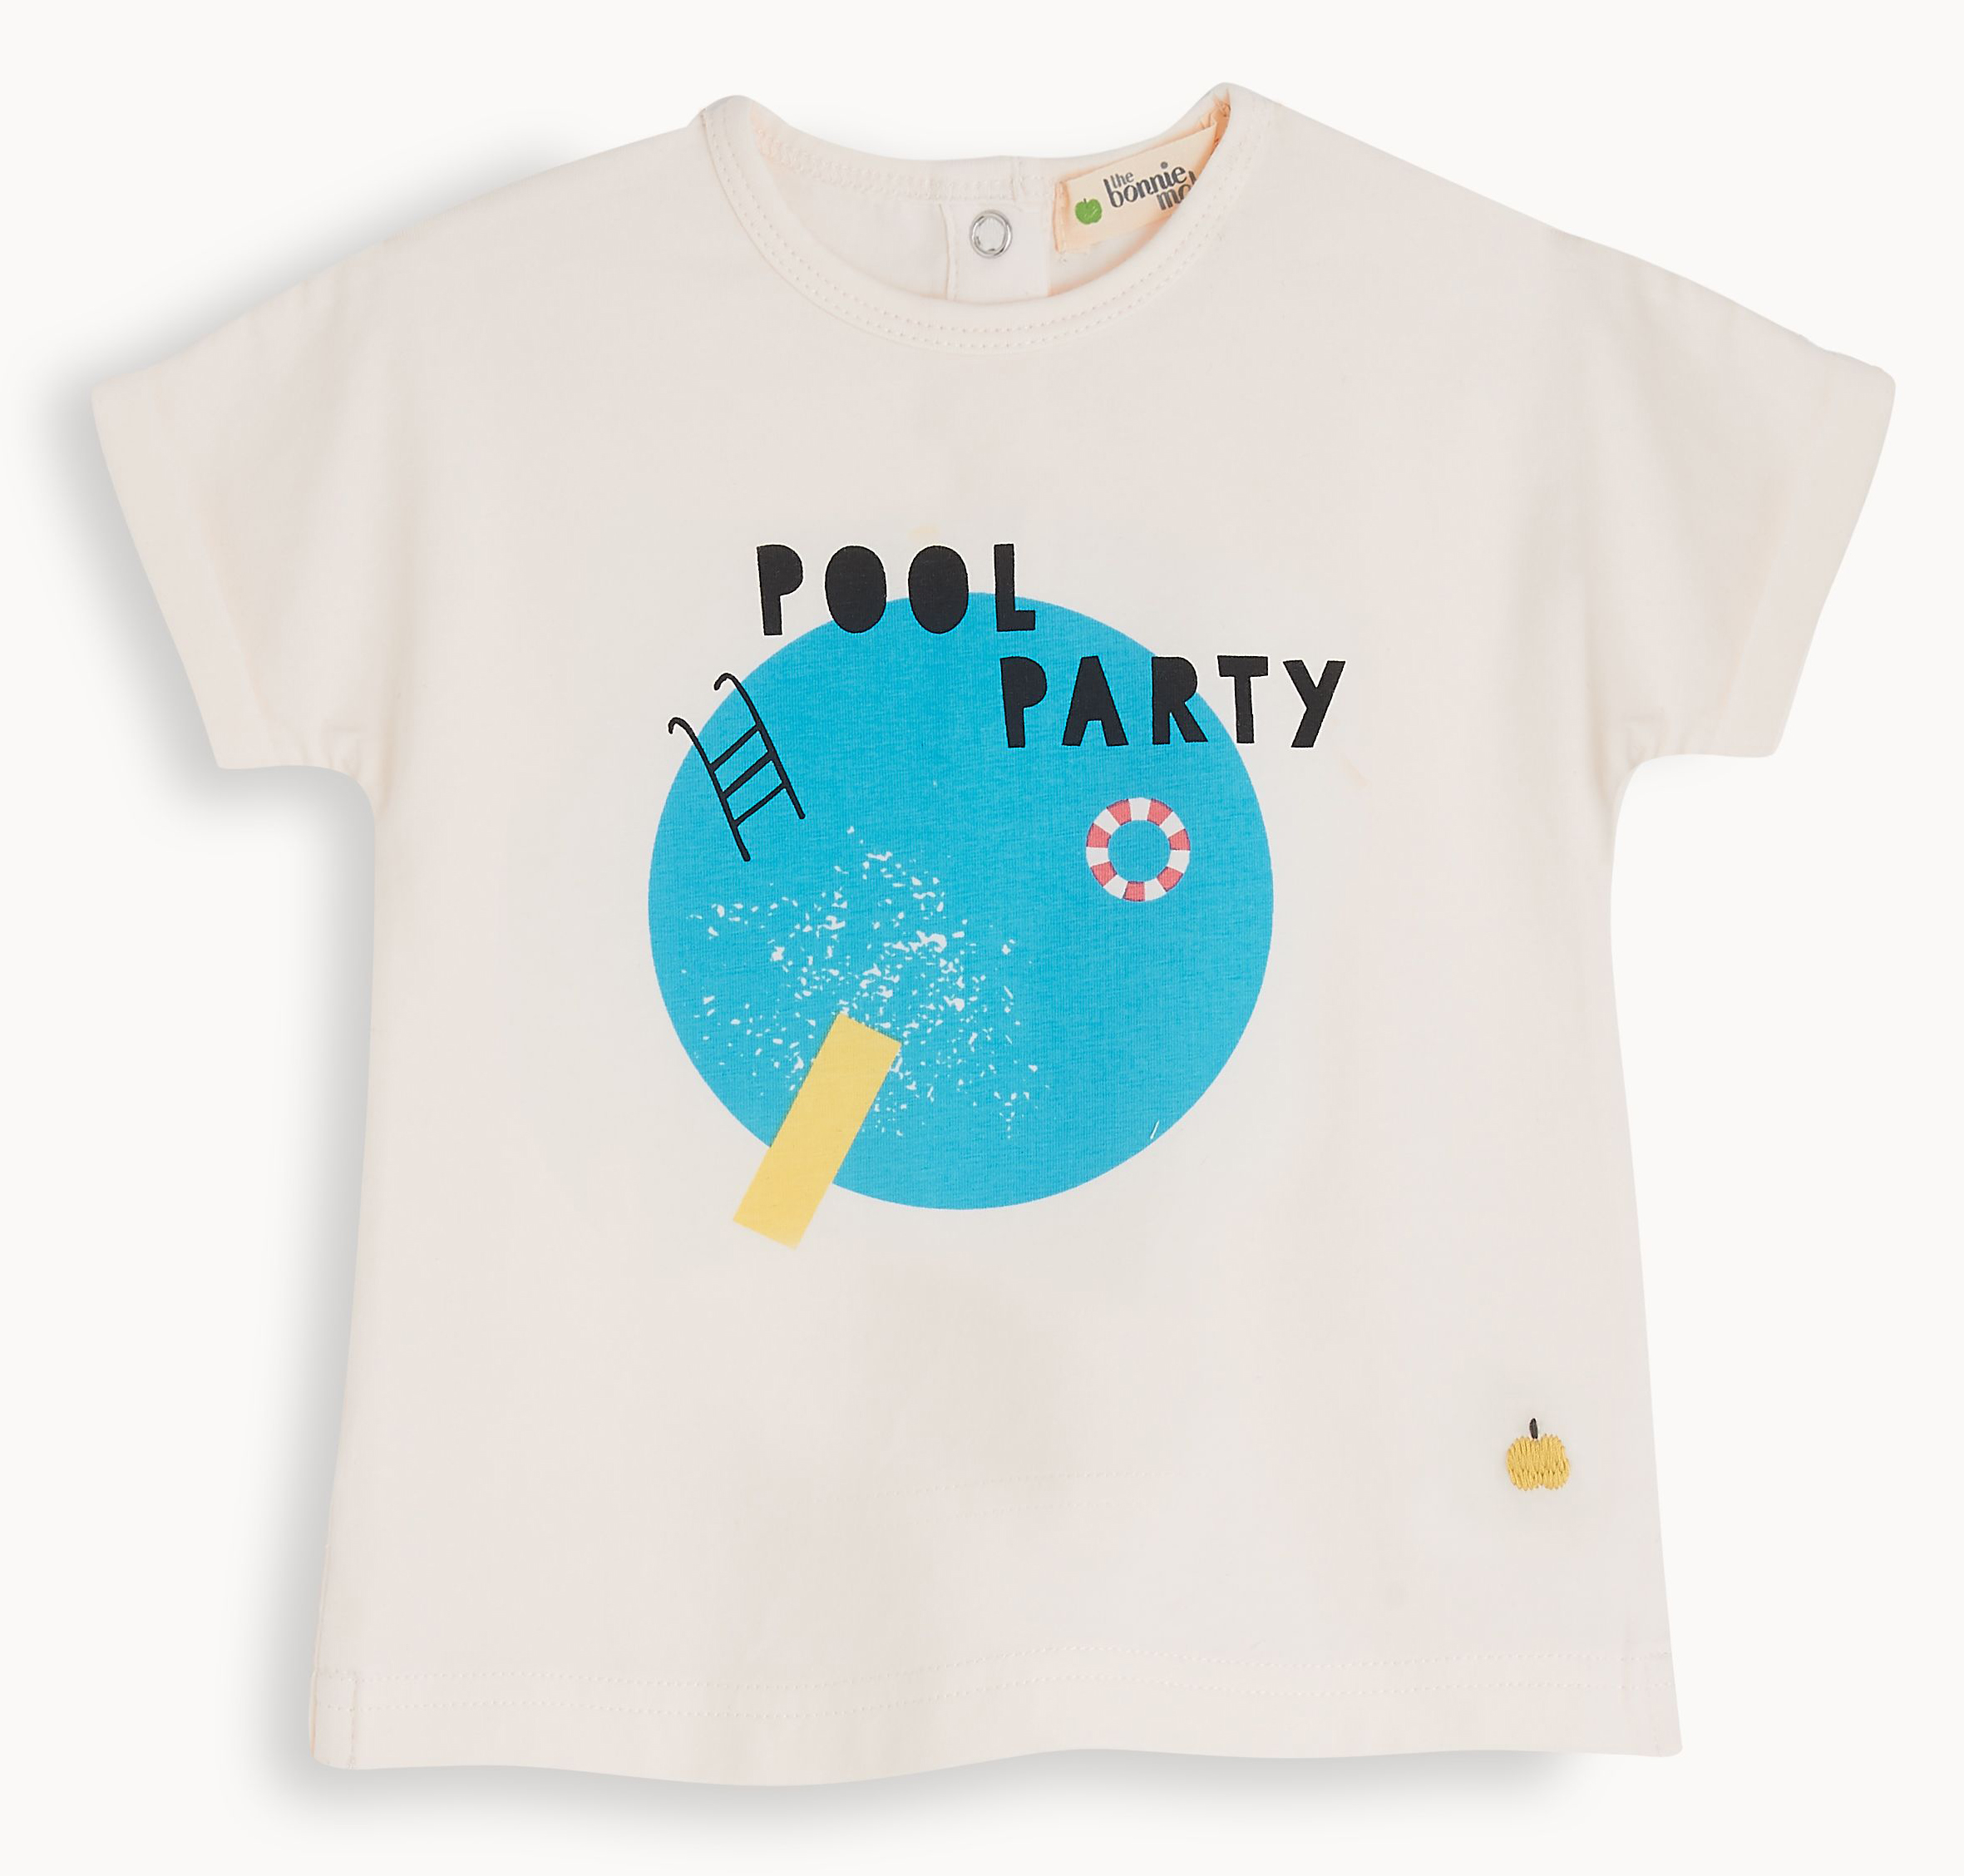                                                                                                                                                   Pool Party Set